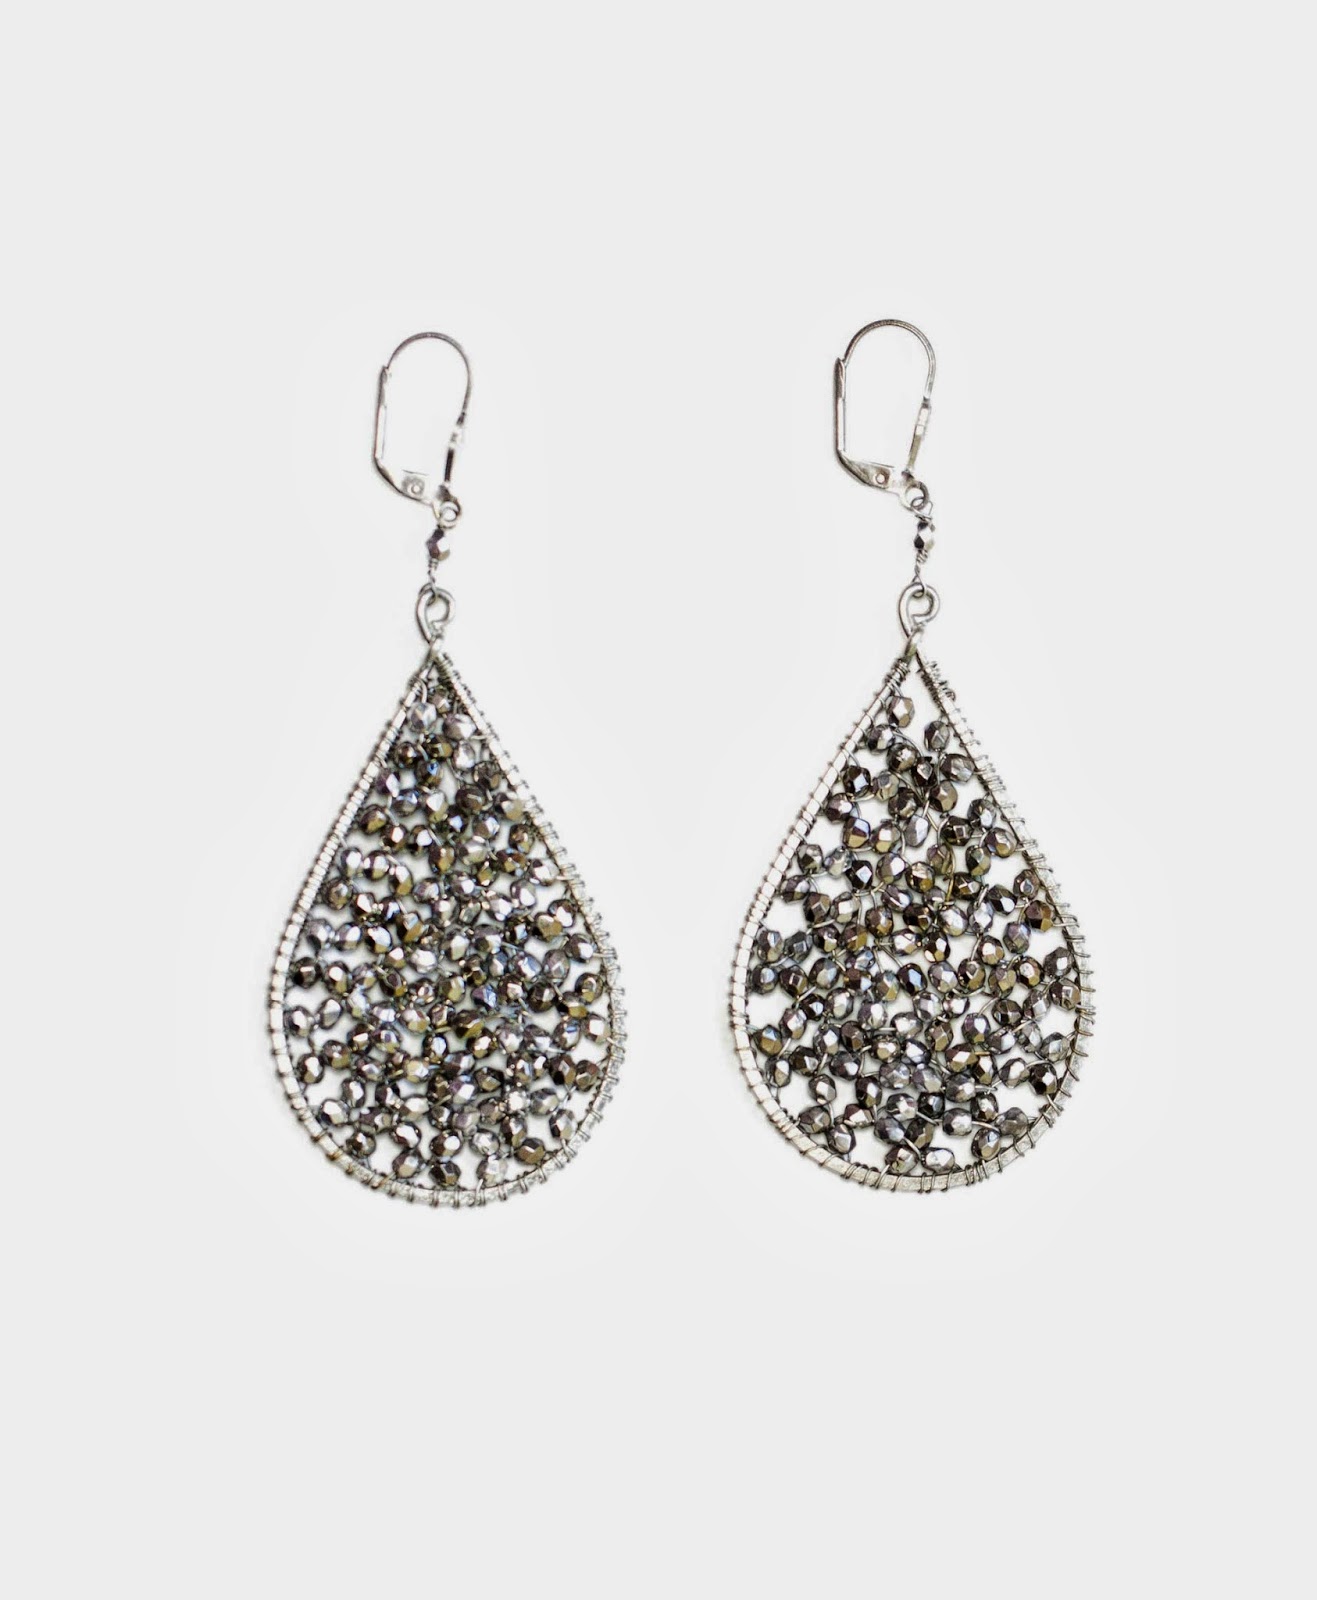 http://www.katemcnatt.noondaycollection.com/earrings/water-drop-prism-earrings